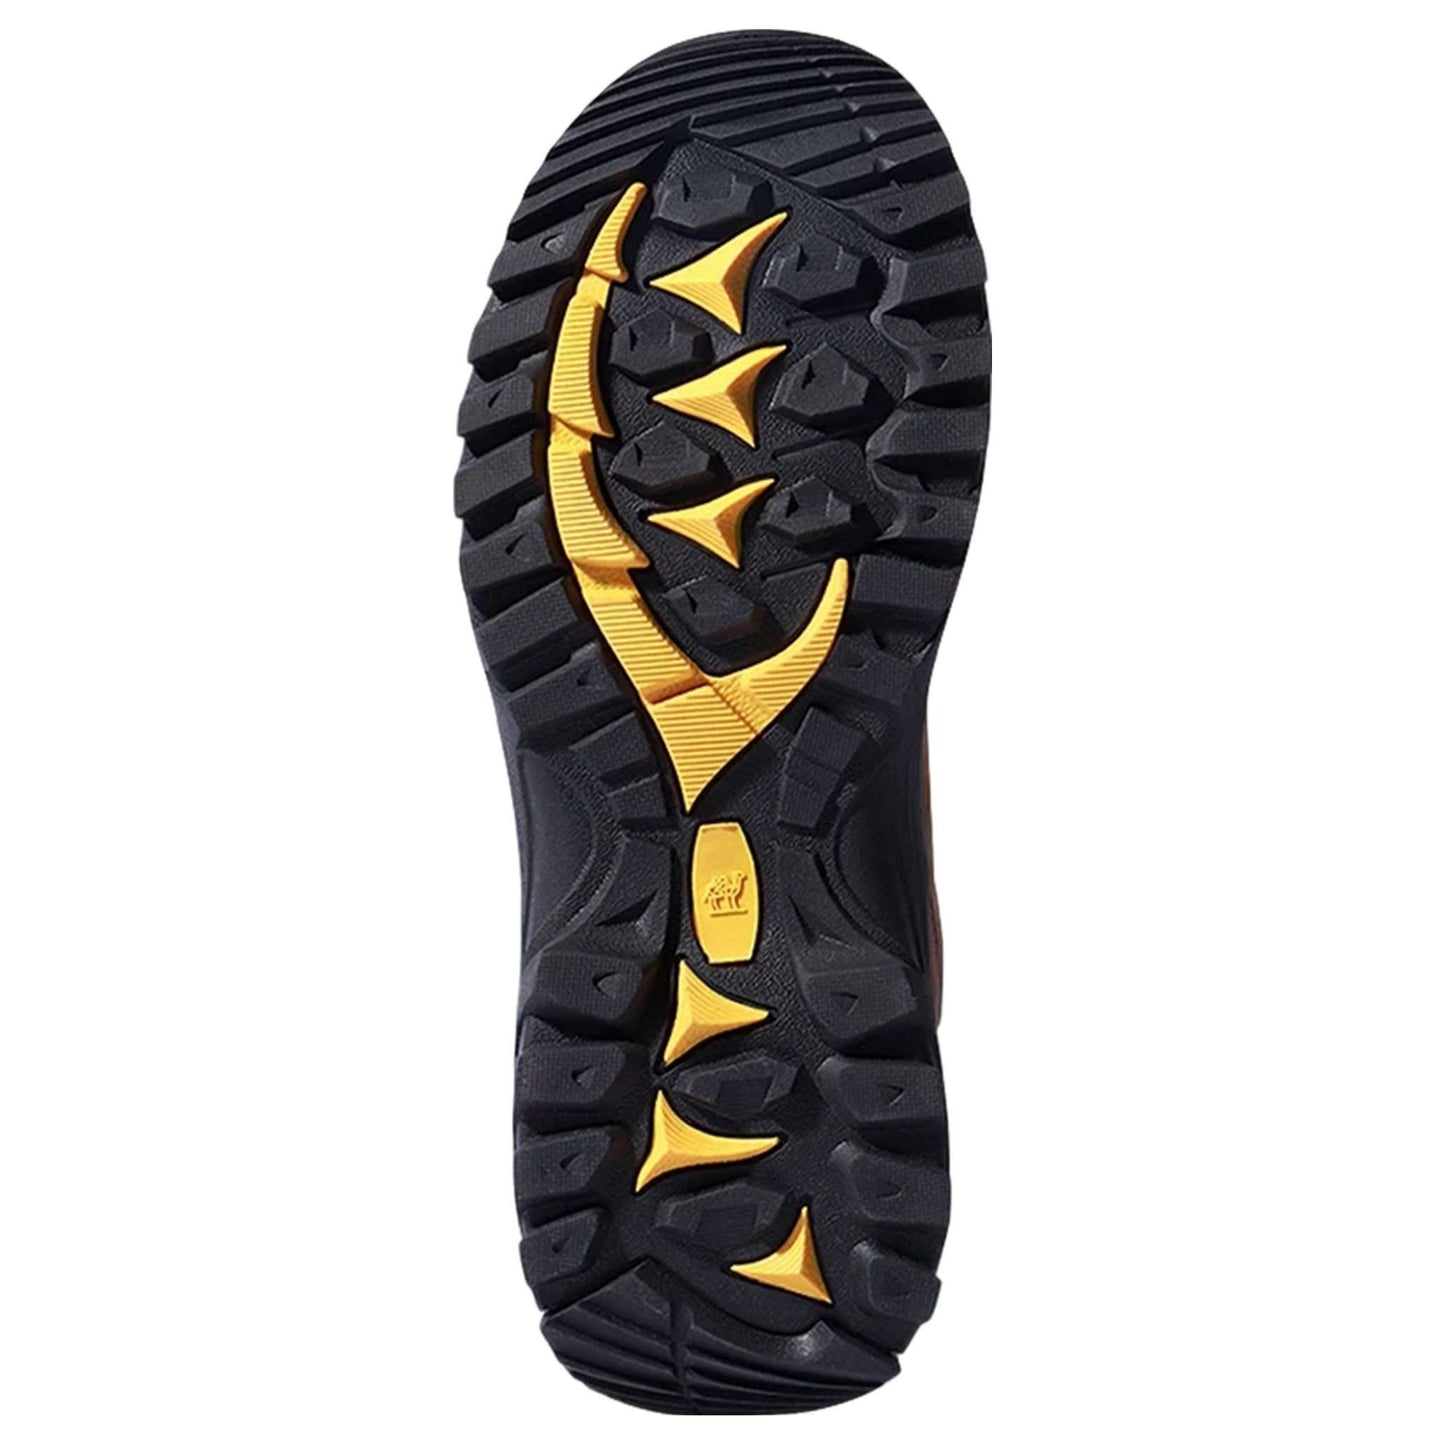 Trailblazer Waterproof Hiking Boots - Durable High-Top Trek Shoes